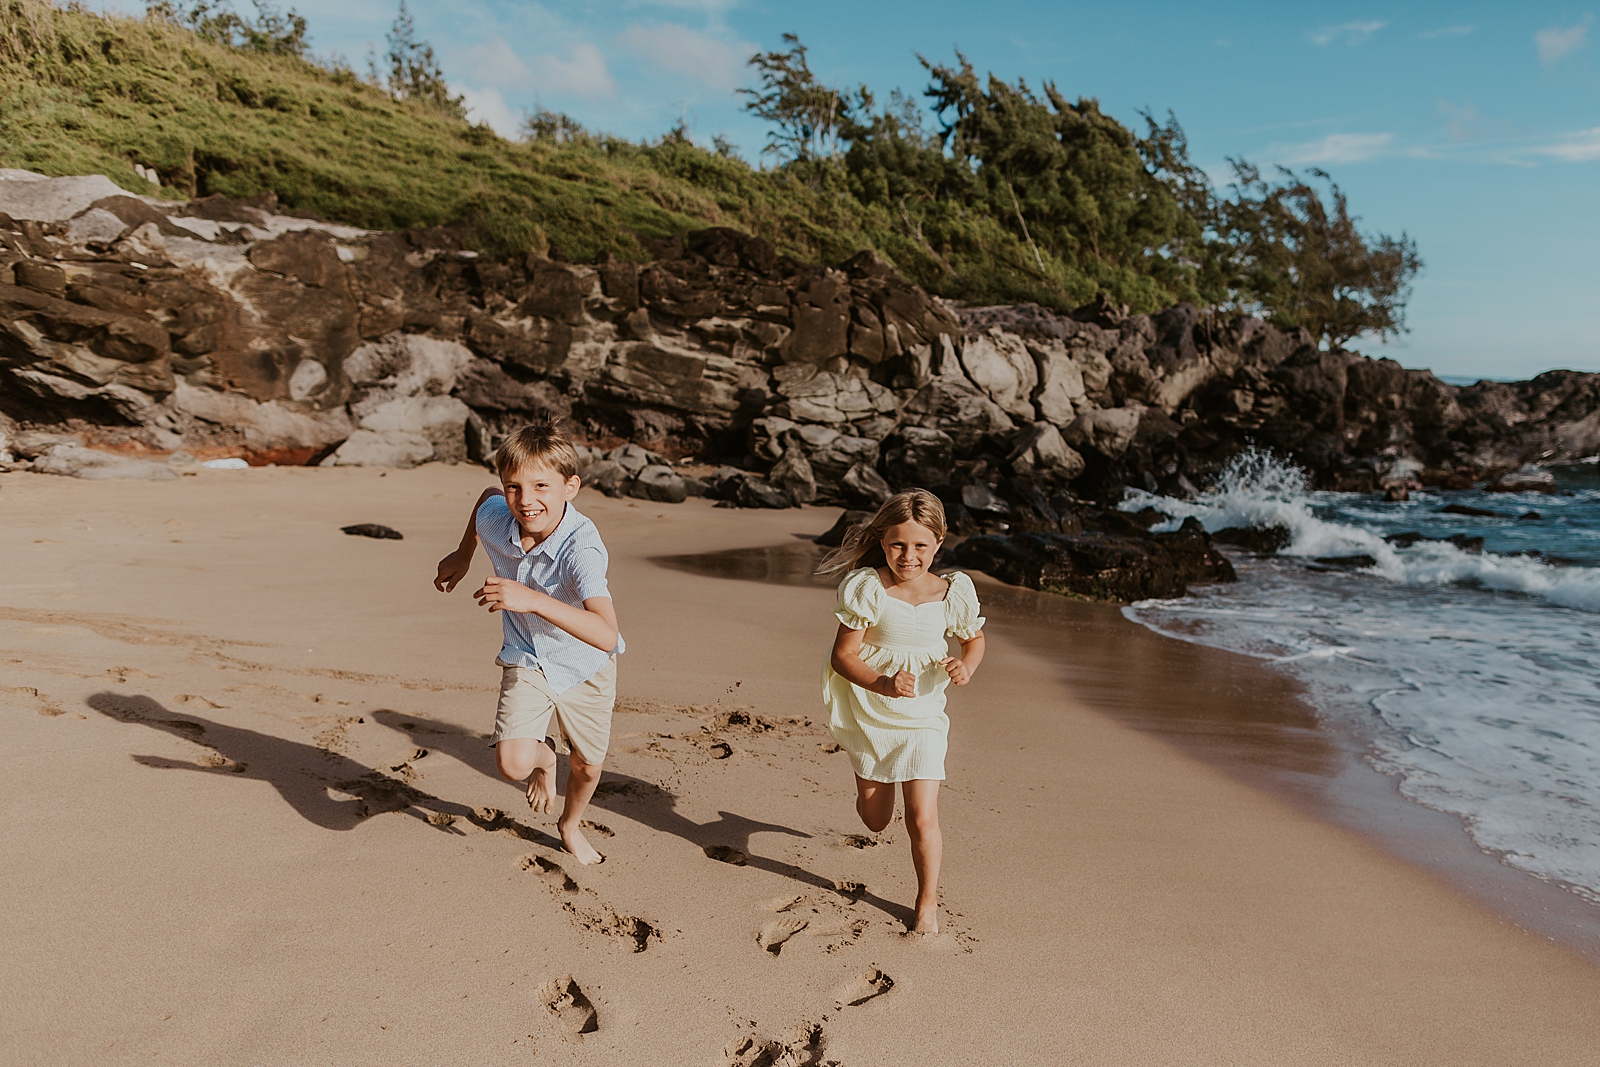 Kids running on the sand